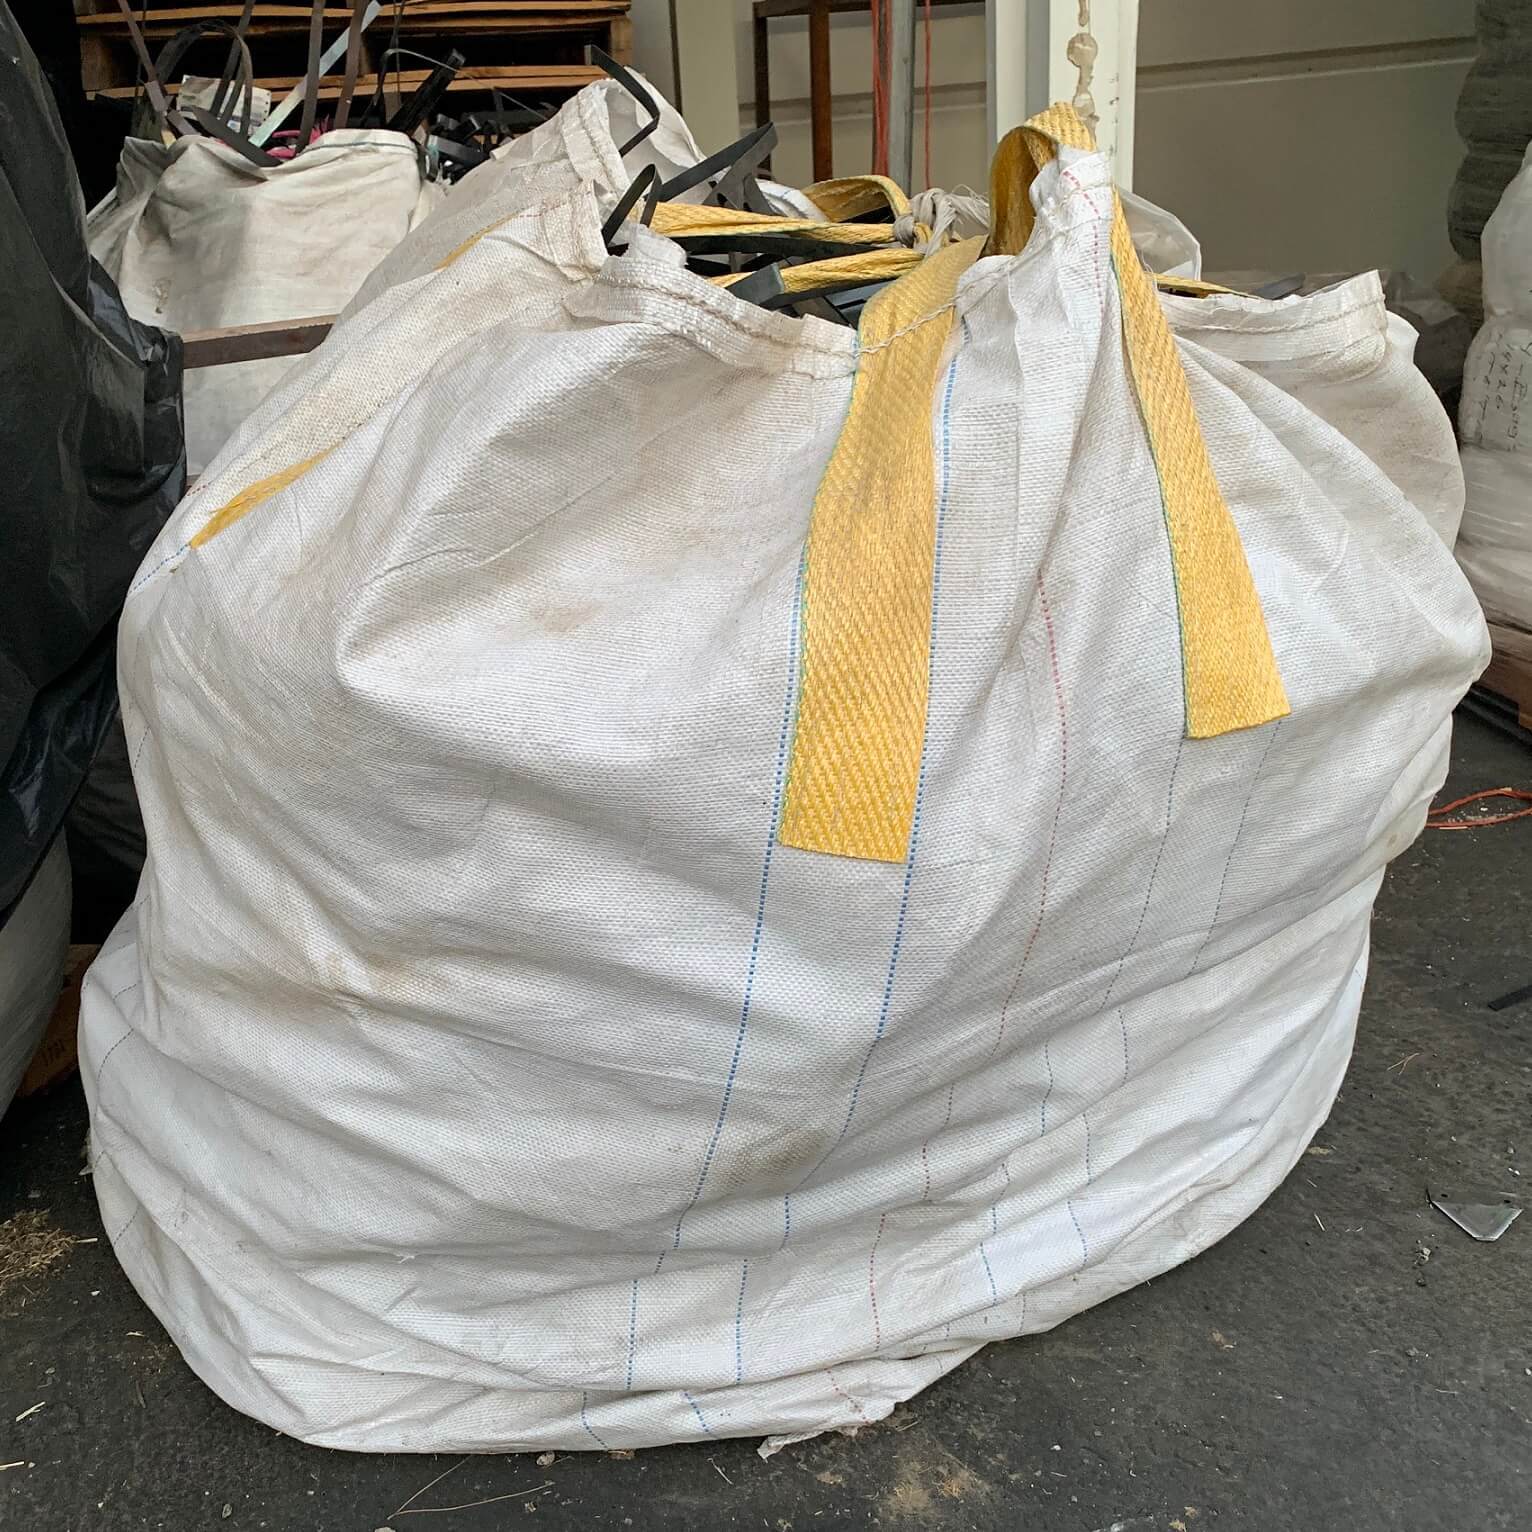 Big Bag, FIBC woven transport bags shredding for recycling and disposal